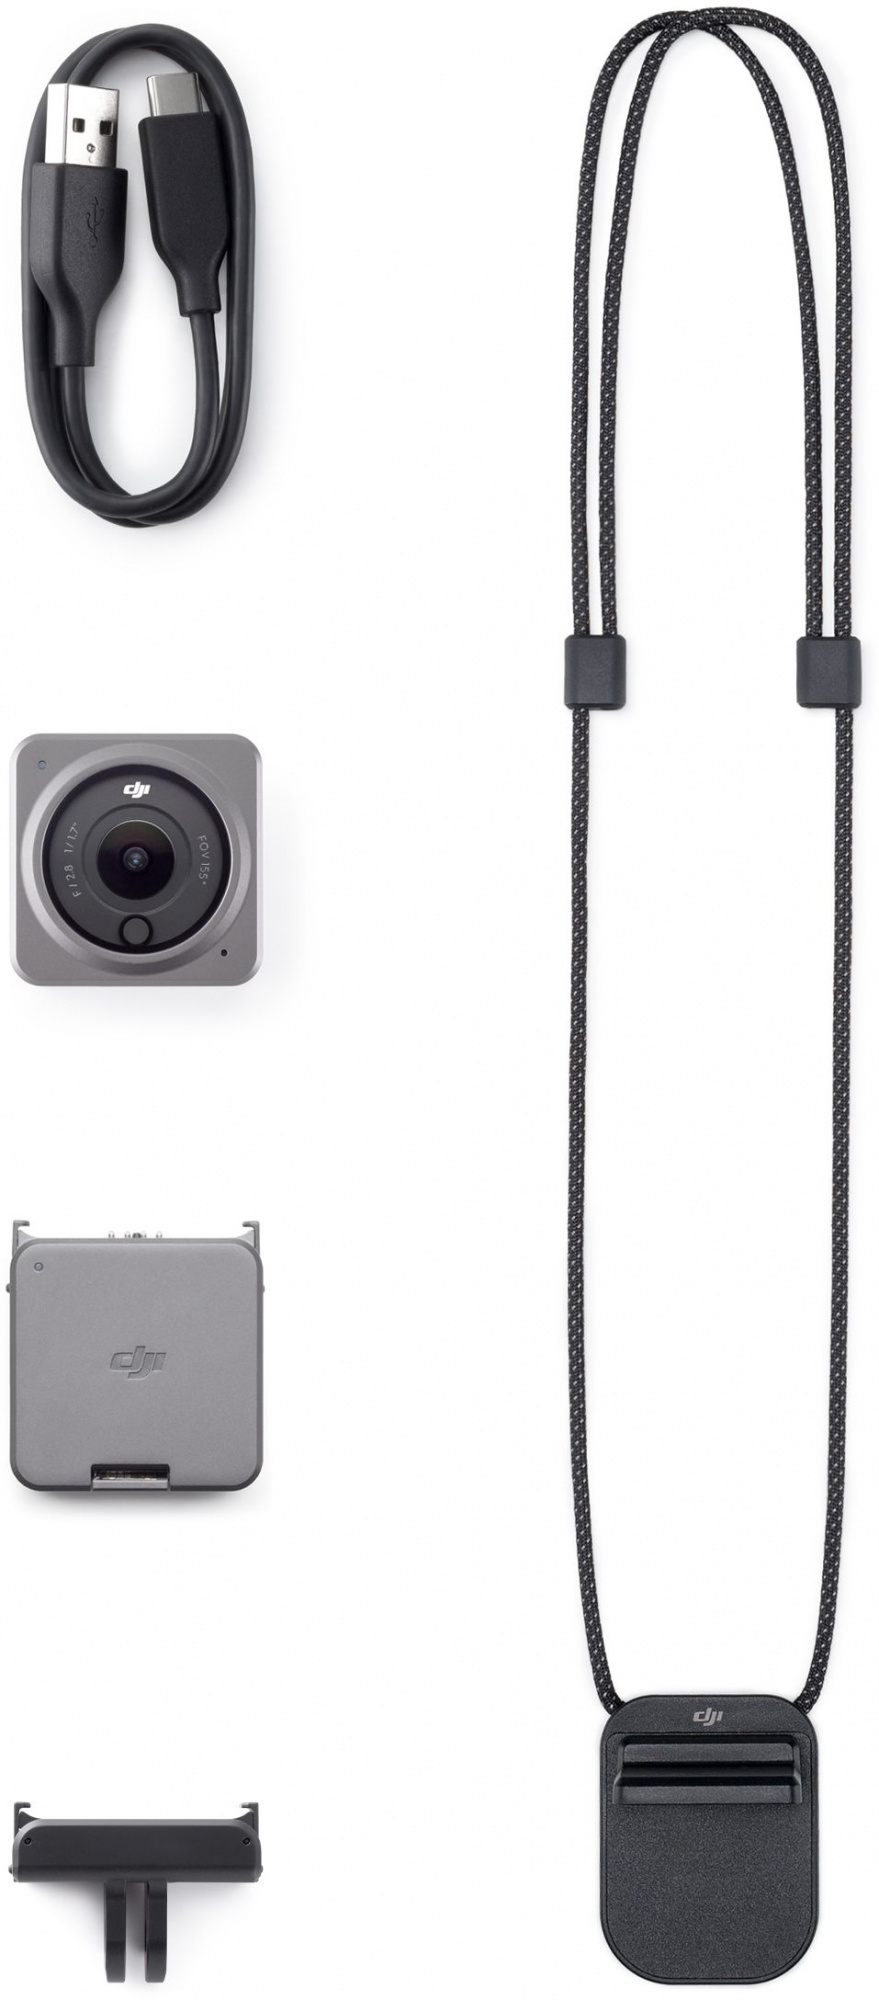 Экшн-камера Dji Action 2 Power Combo, серый